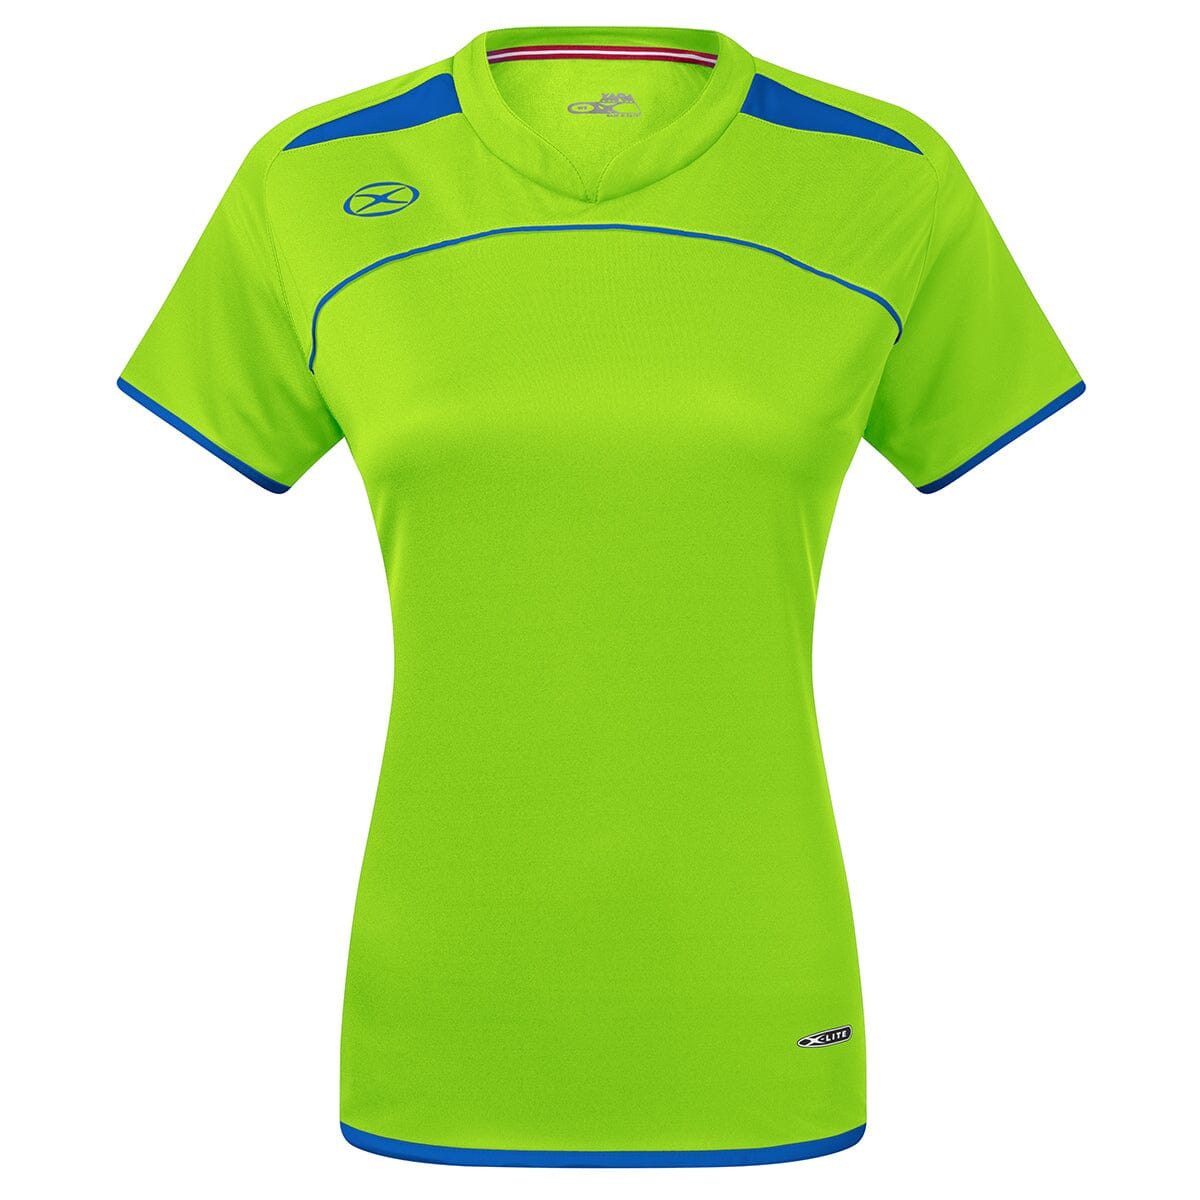 Cardiff Jersey - Female Shirt Xara Soccer Bright Green/Royal Womens Medium 